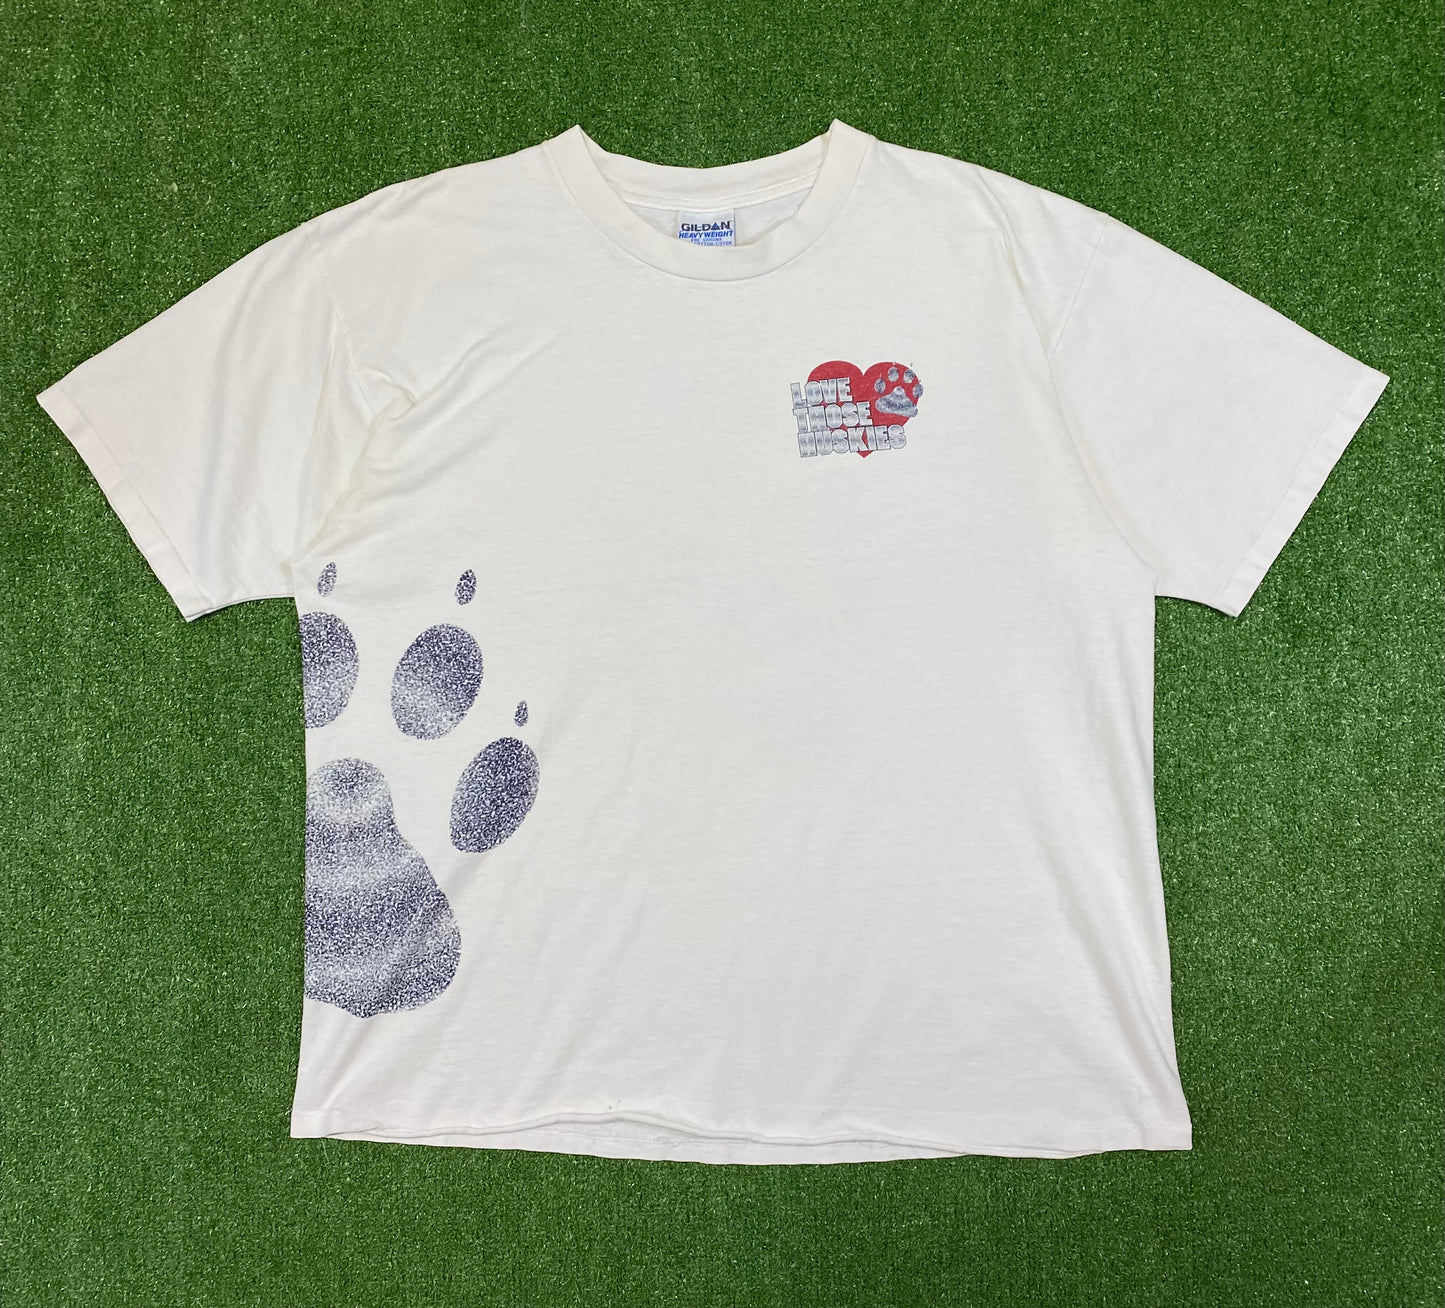 1990’s UConn Huskies “Beware of the Dog” T-Shirt